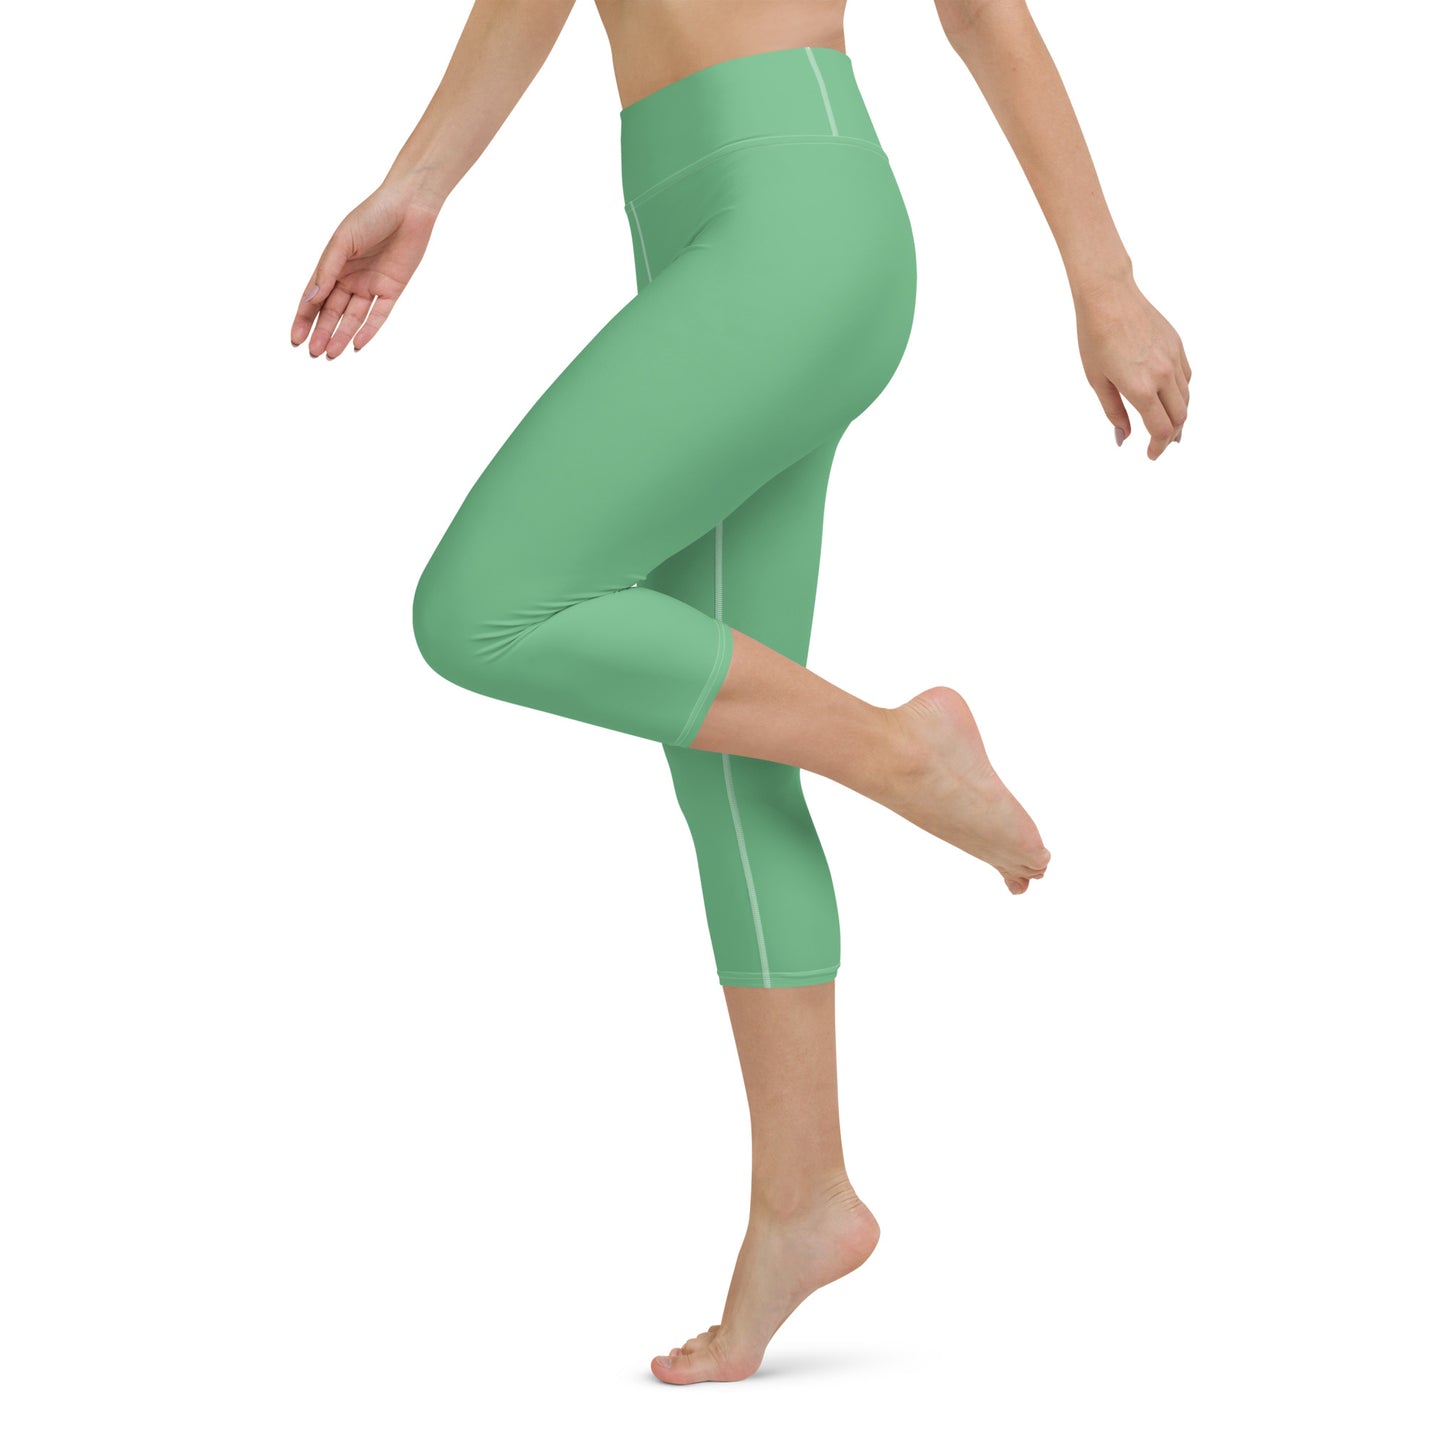 Marbella Solid Green Capri High Waist Yoga Leggings / Pants with Inside Pocket